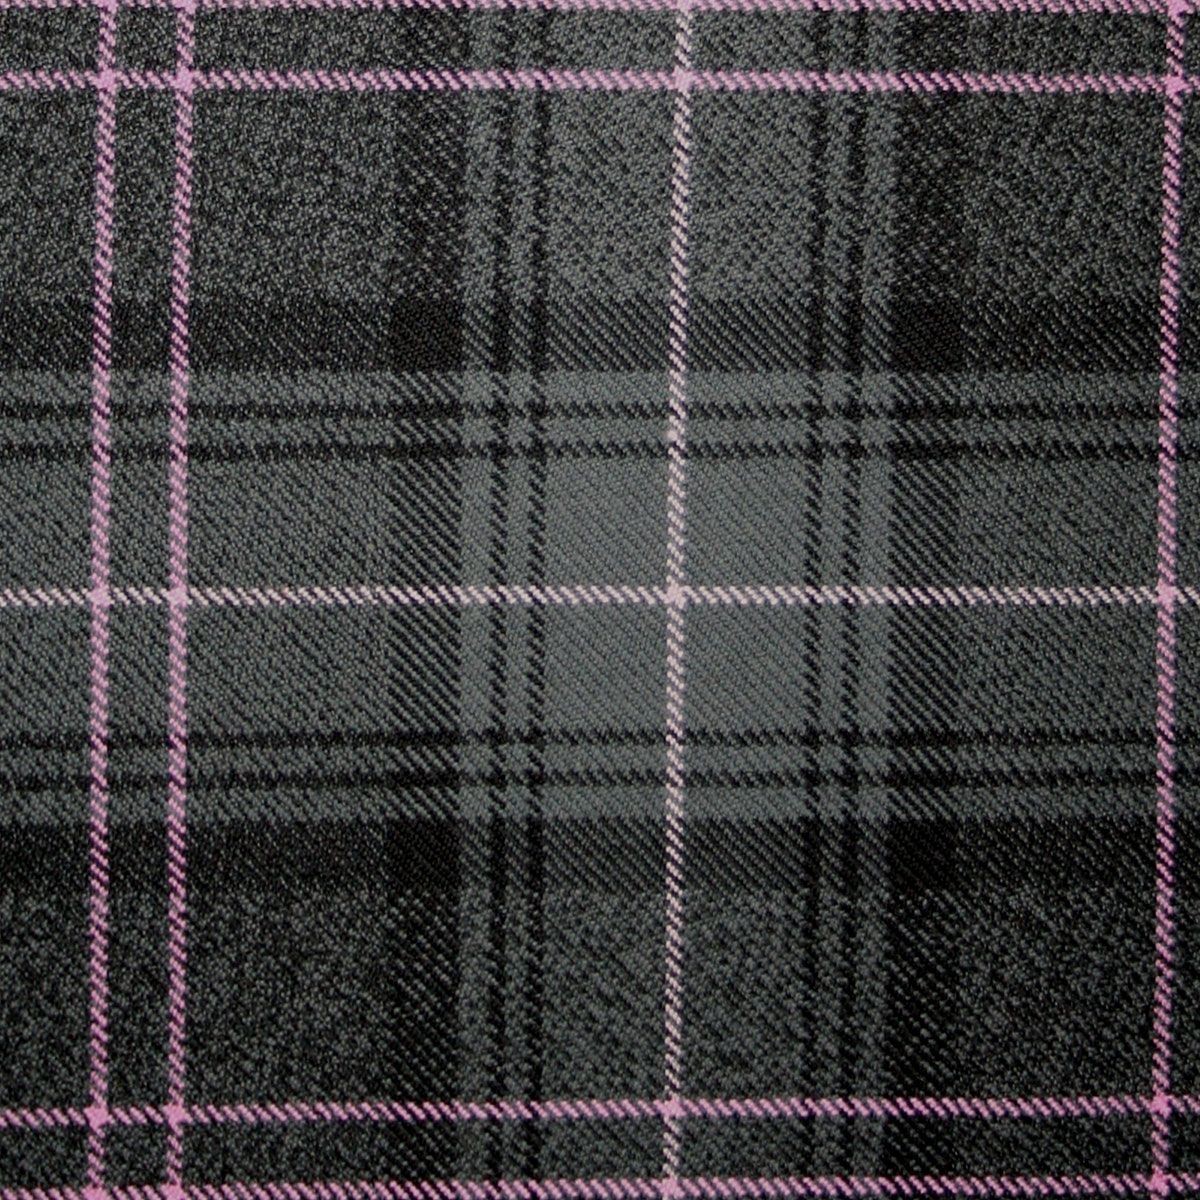 Highland Granite Pink Heavy Weight Tartan Fabric